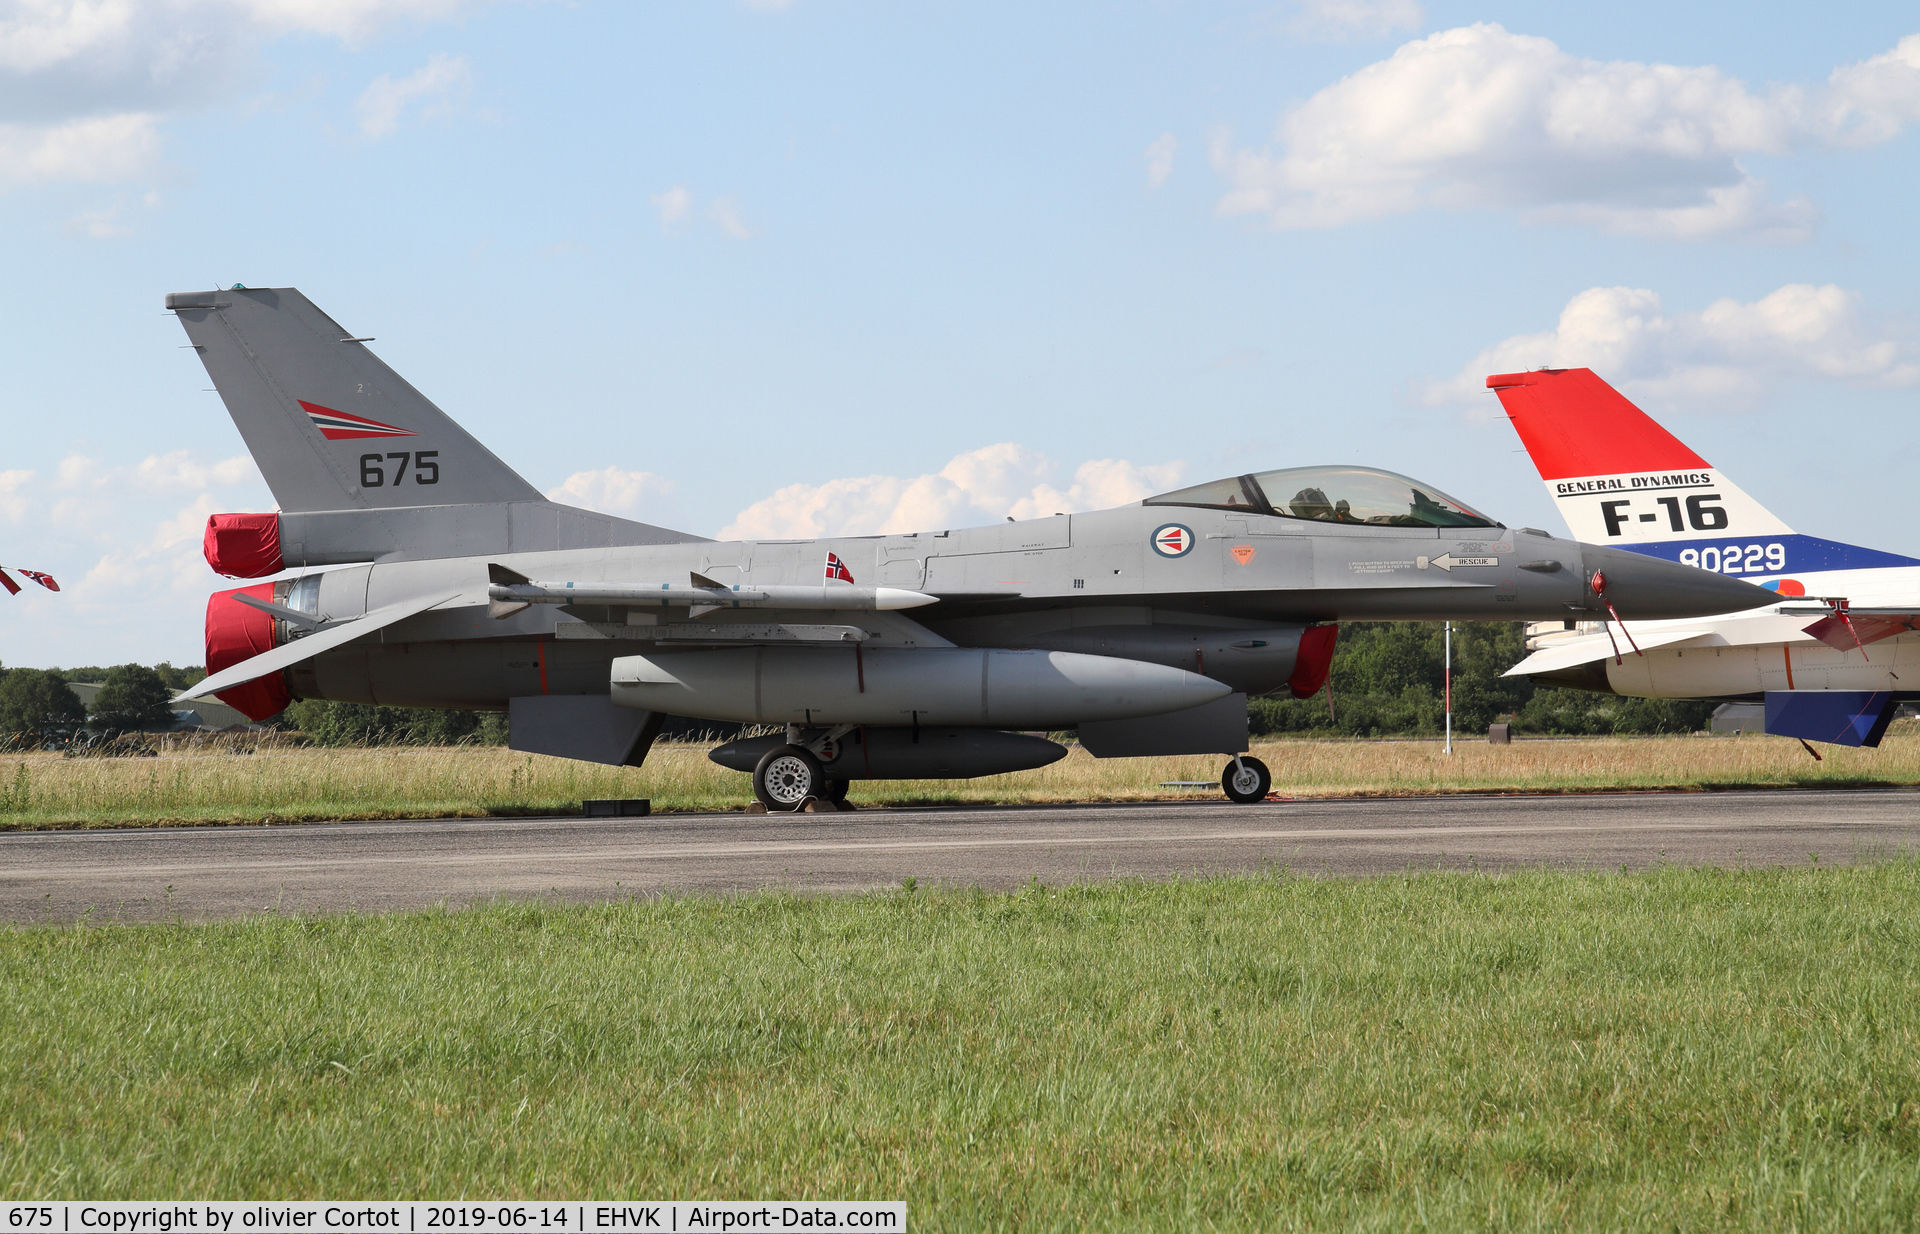 675, 1980 General Dynamics F-16AM Fighting Falcon C/N 6K-47, 2019 airshow